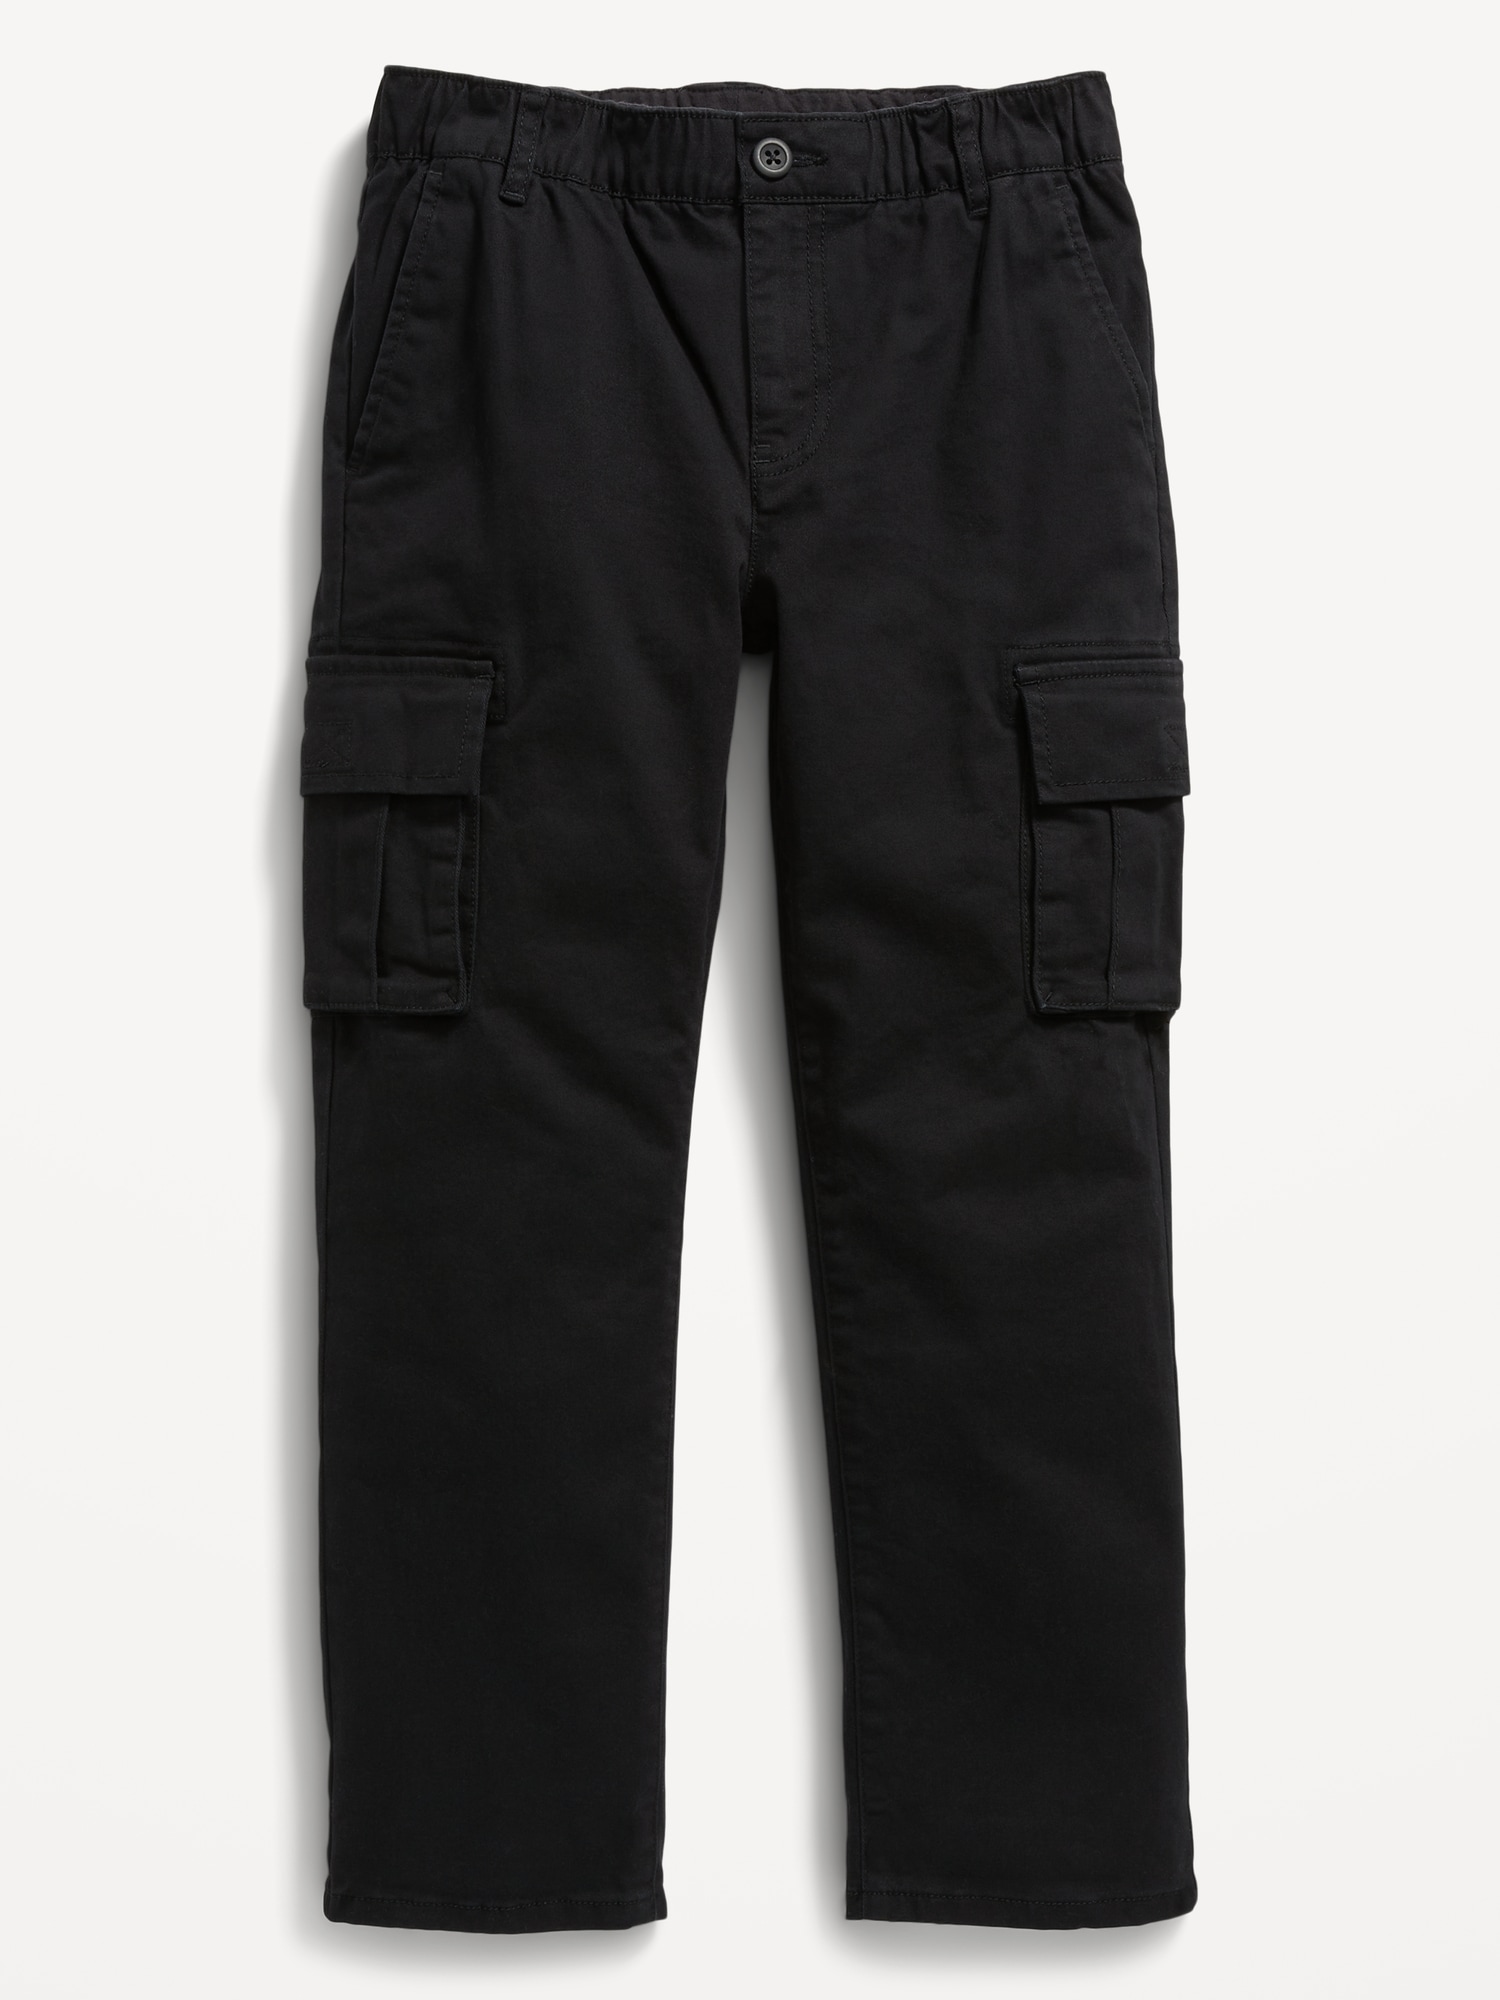 Old Navy Built-In Flex Cargo Taper Pants for Boys black. 1